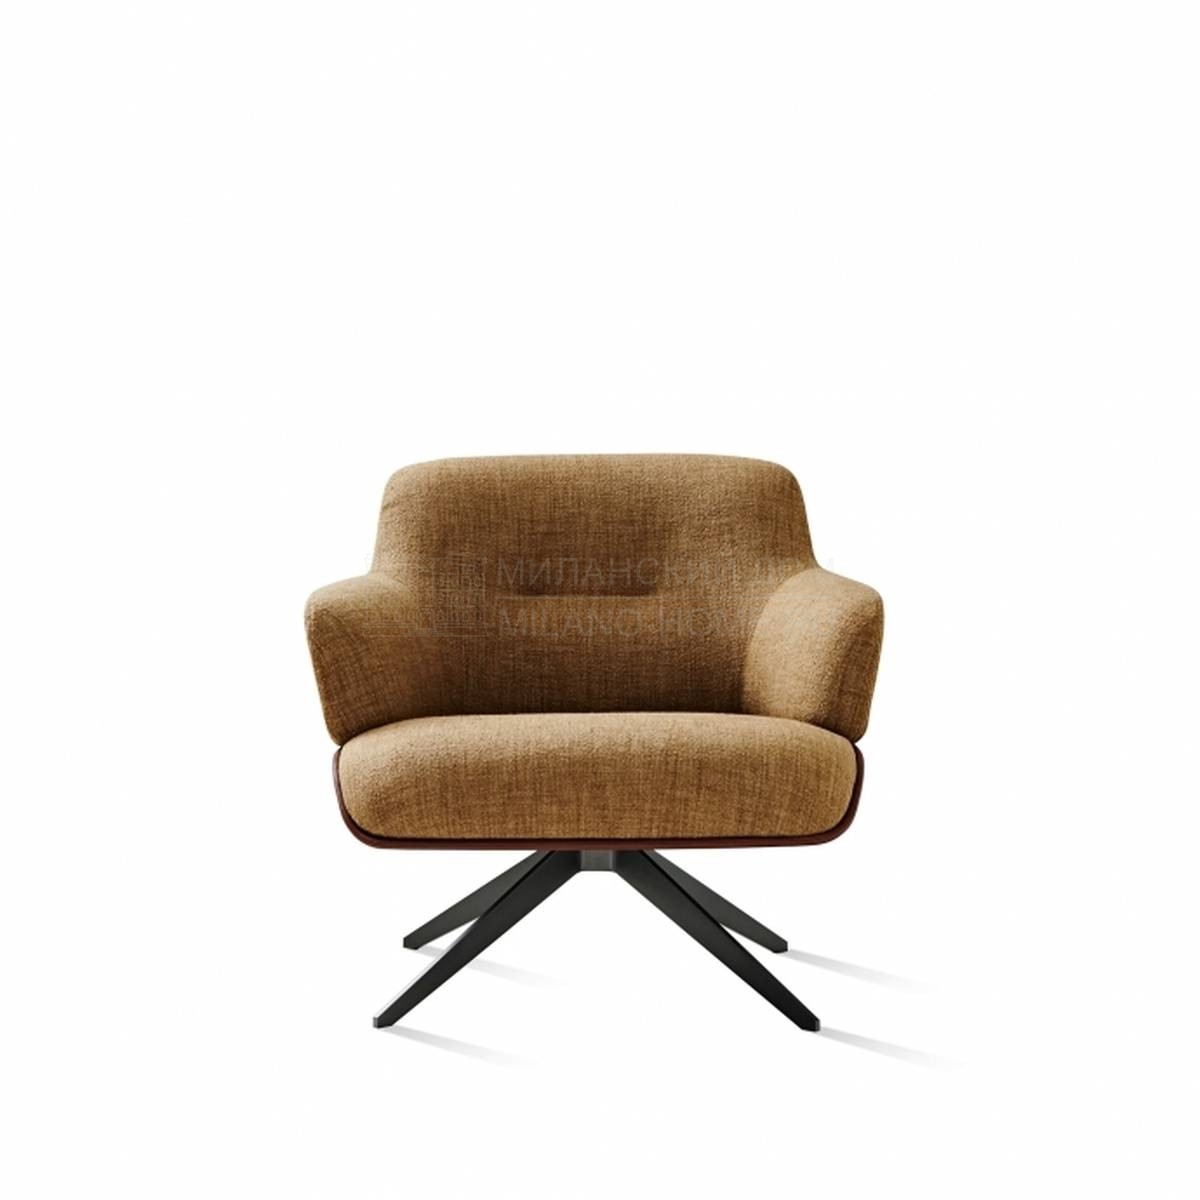 Кресло Kensington small armchair из Италии фабрики MOLTENI